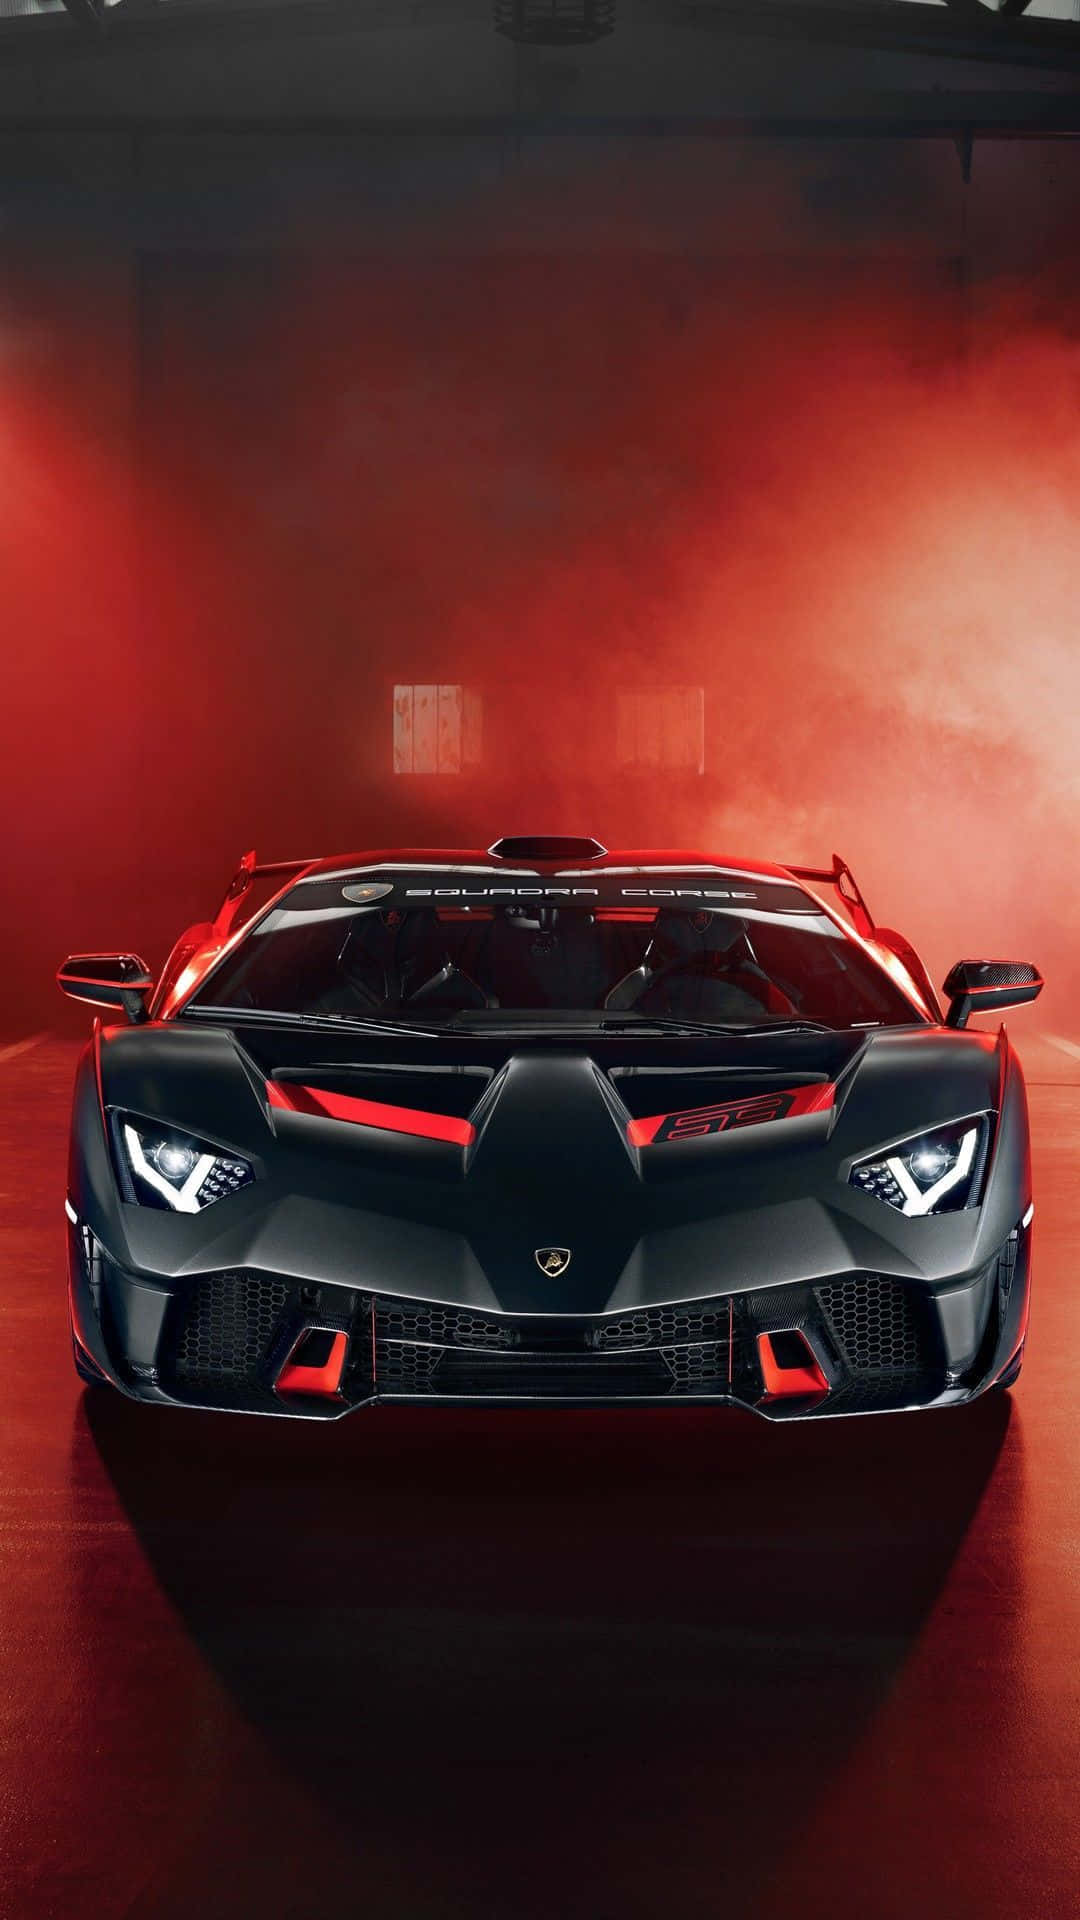 Luxoaonde Quer Que Vá: O Lamborghini Pixel 3 Xl.